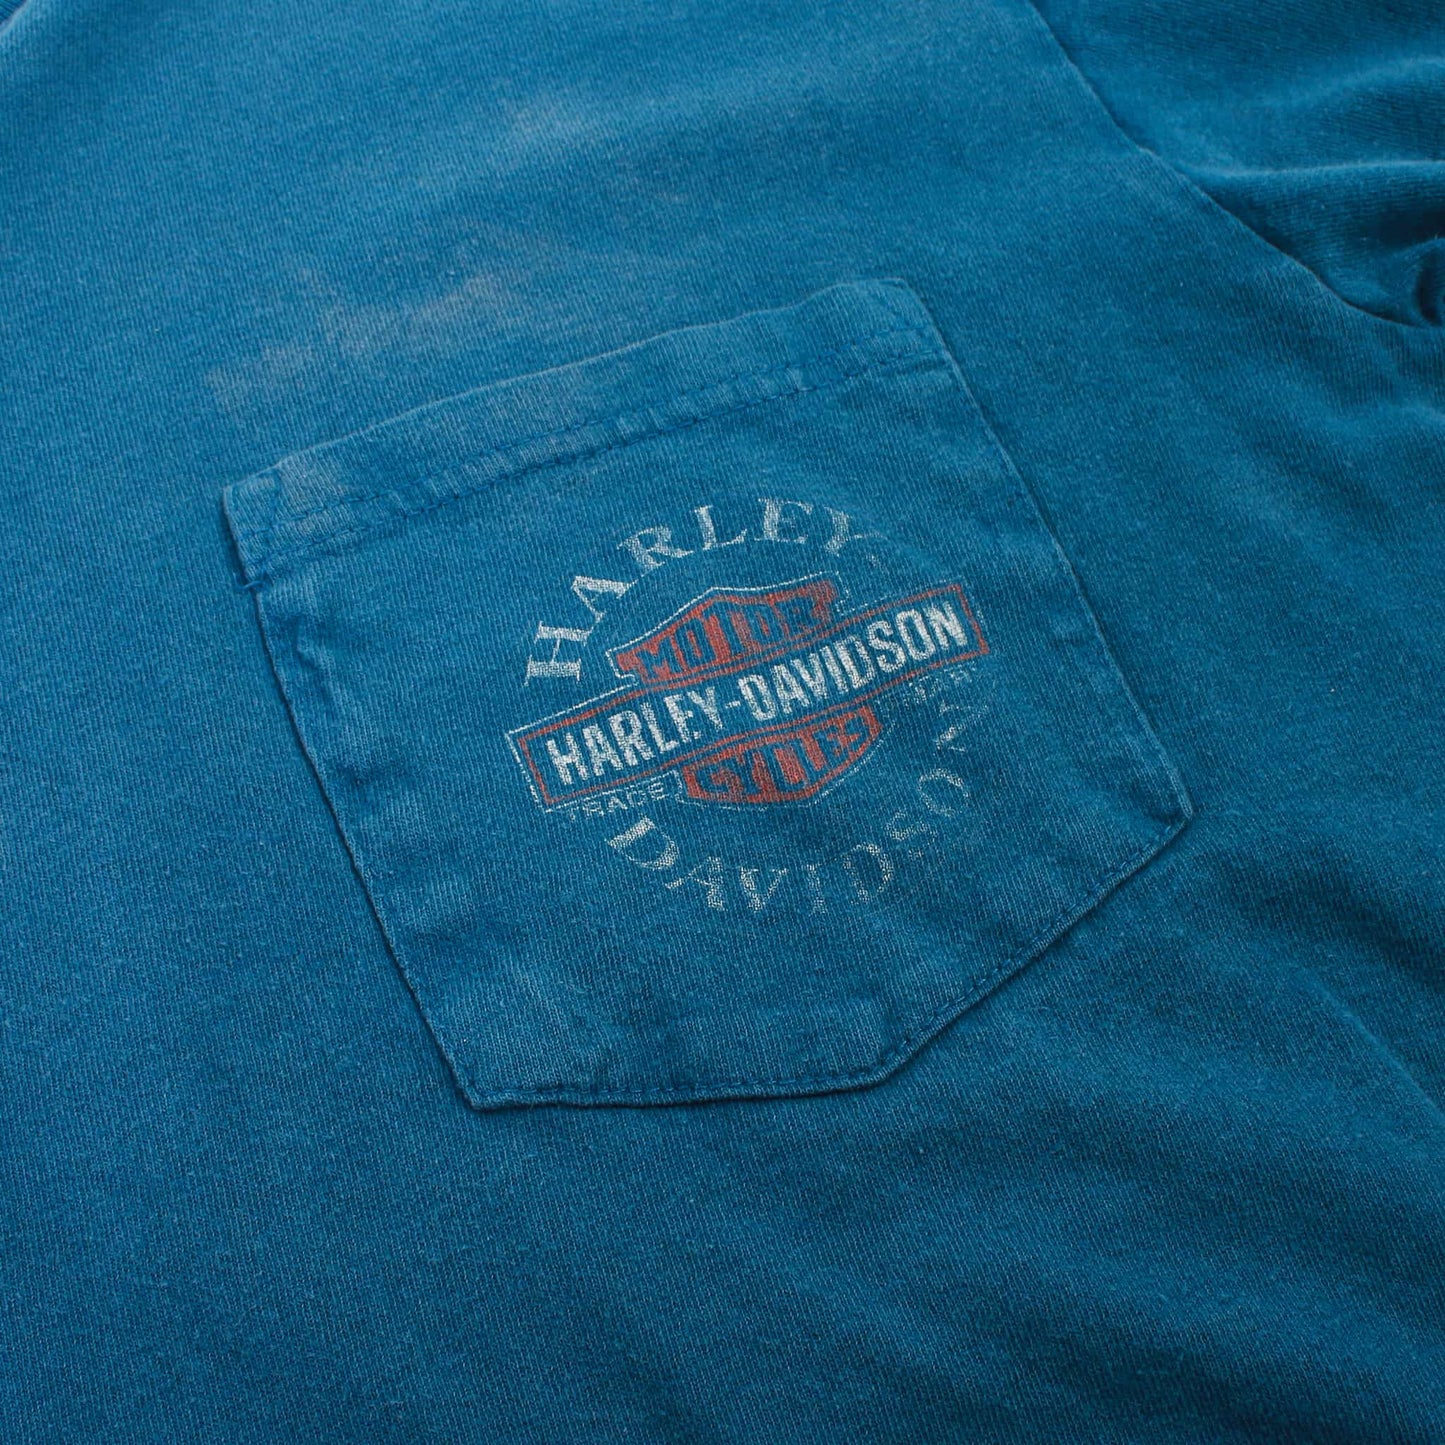 Harley Davidson 'Atlantic County' T-Shirt - American Madness